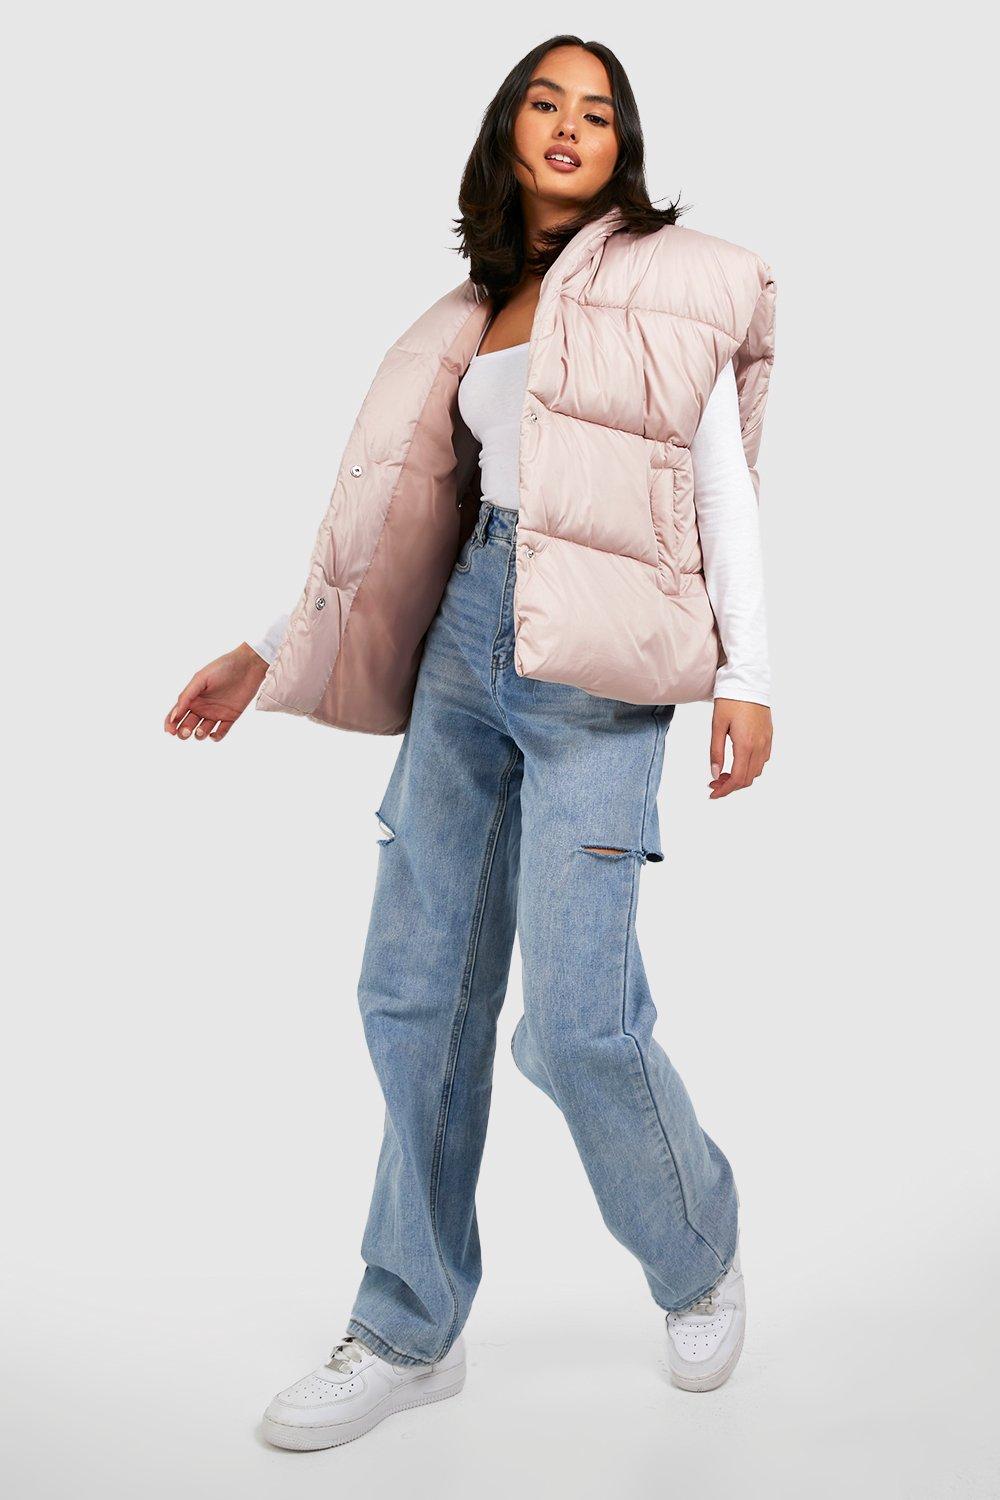 Caicj98 Women's Oversized Puffer Vest